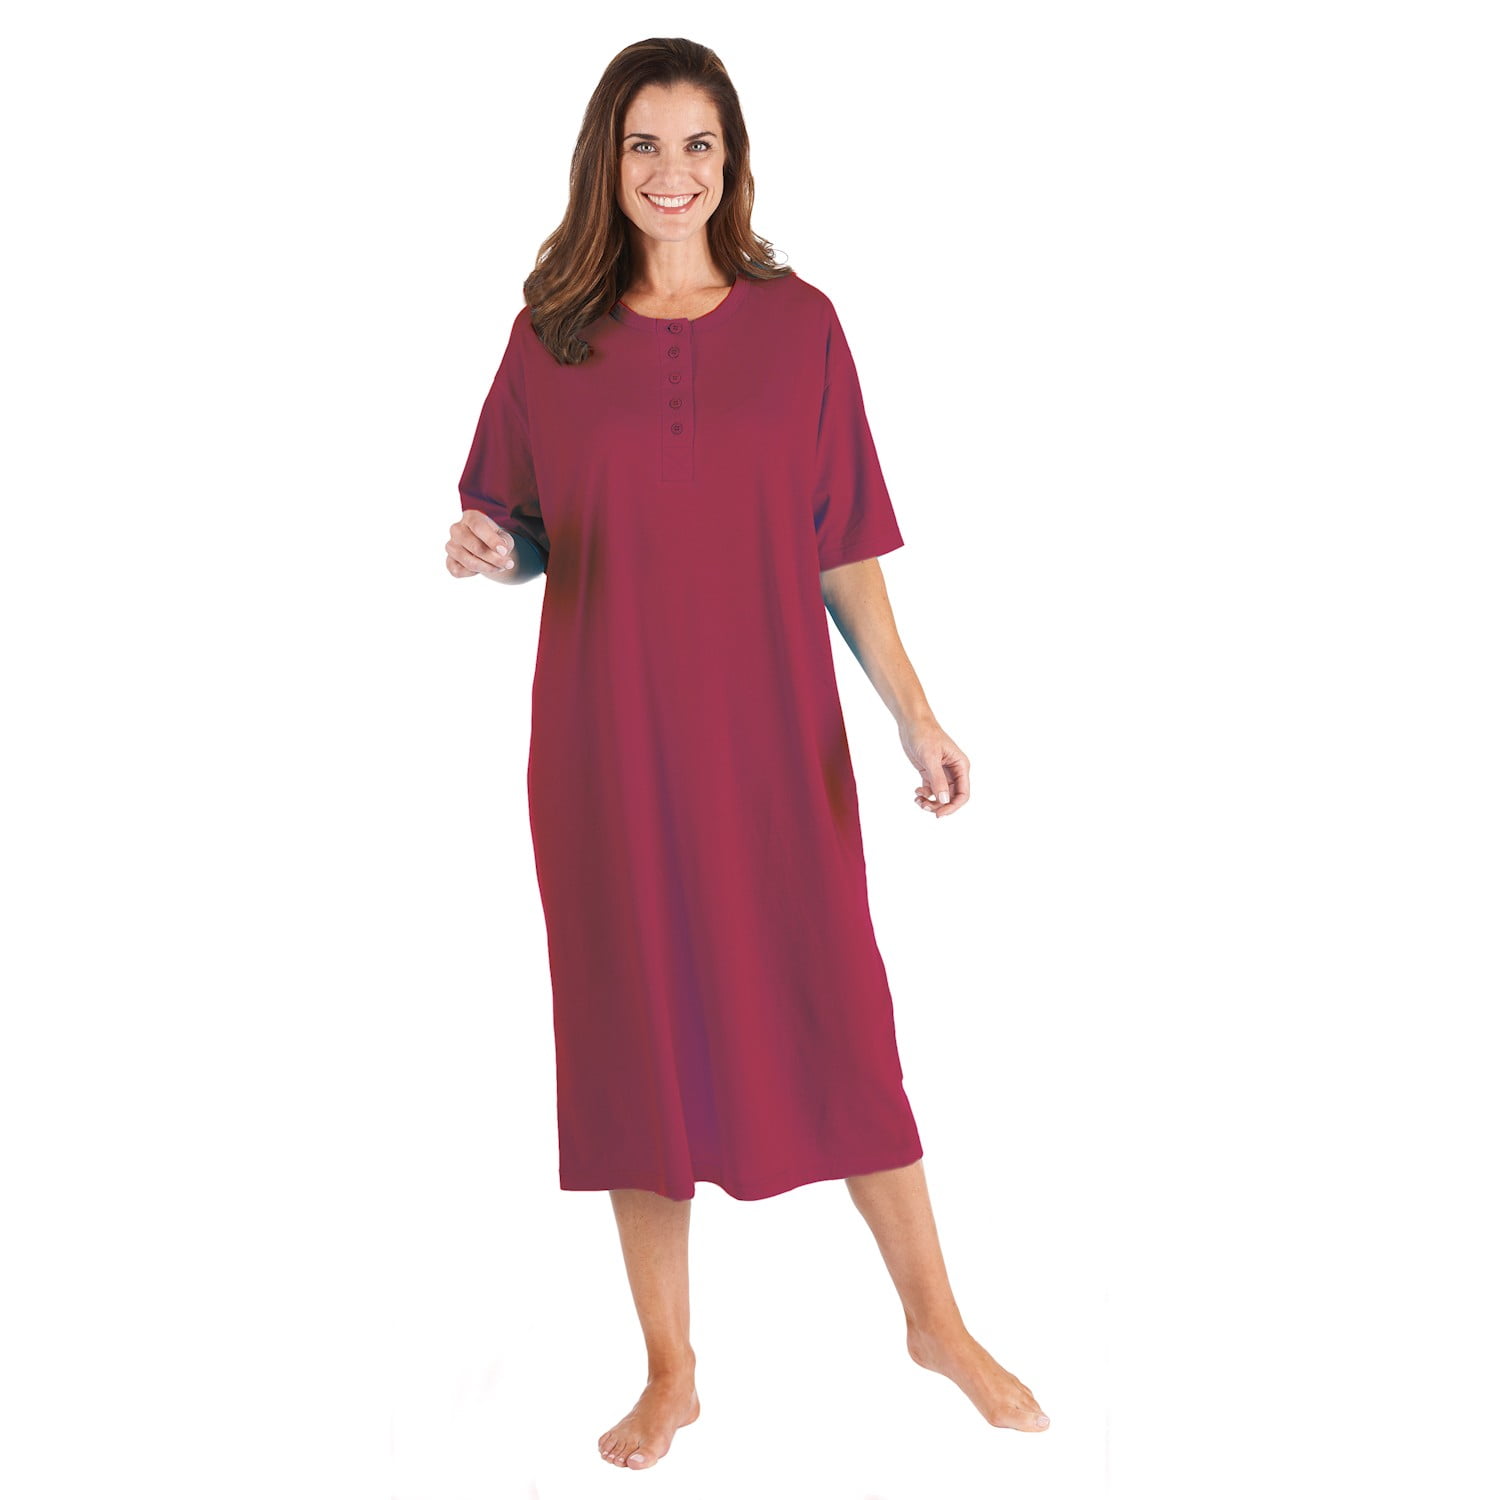 CATALOG CLASSICS Womens Nightgown Henley Night Shirt 100% Cotton Night Gown,  Green/Burgundy, Missy (8-18), 46L 